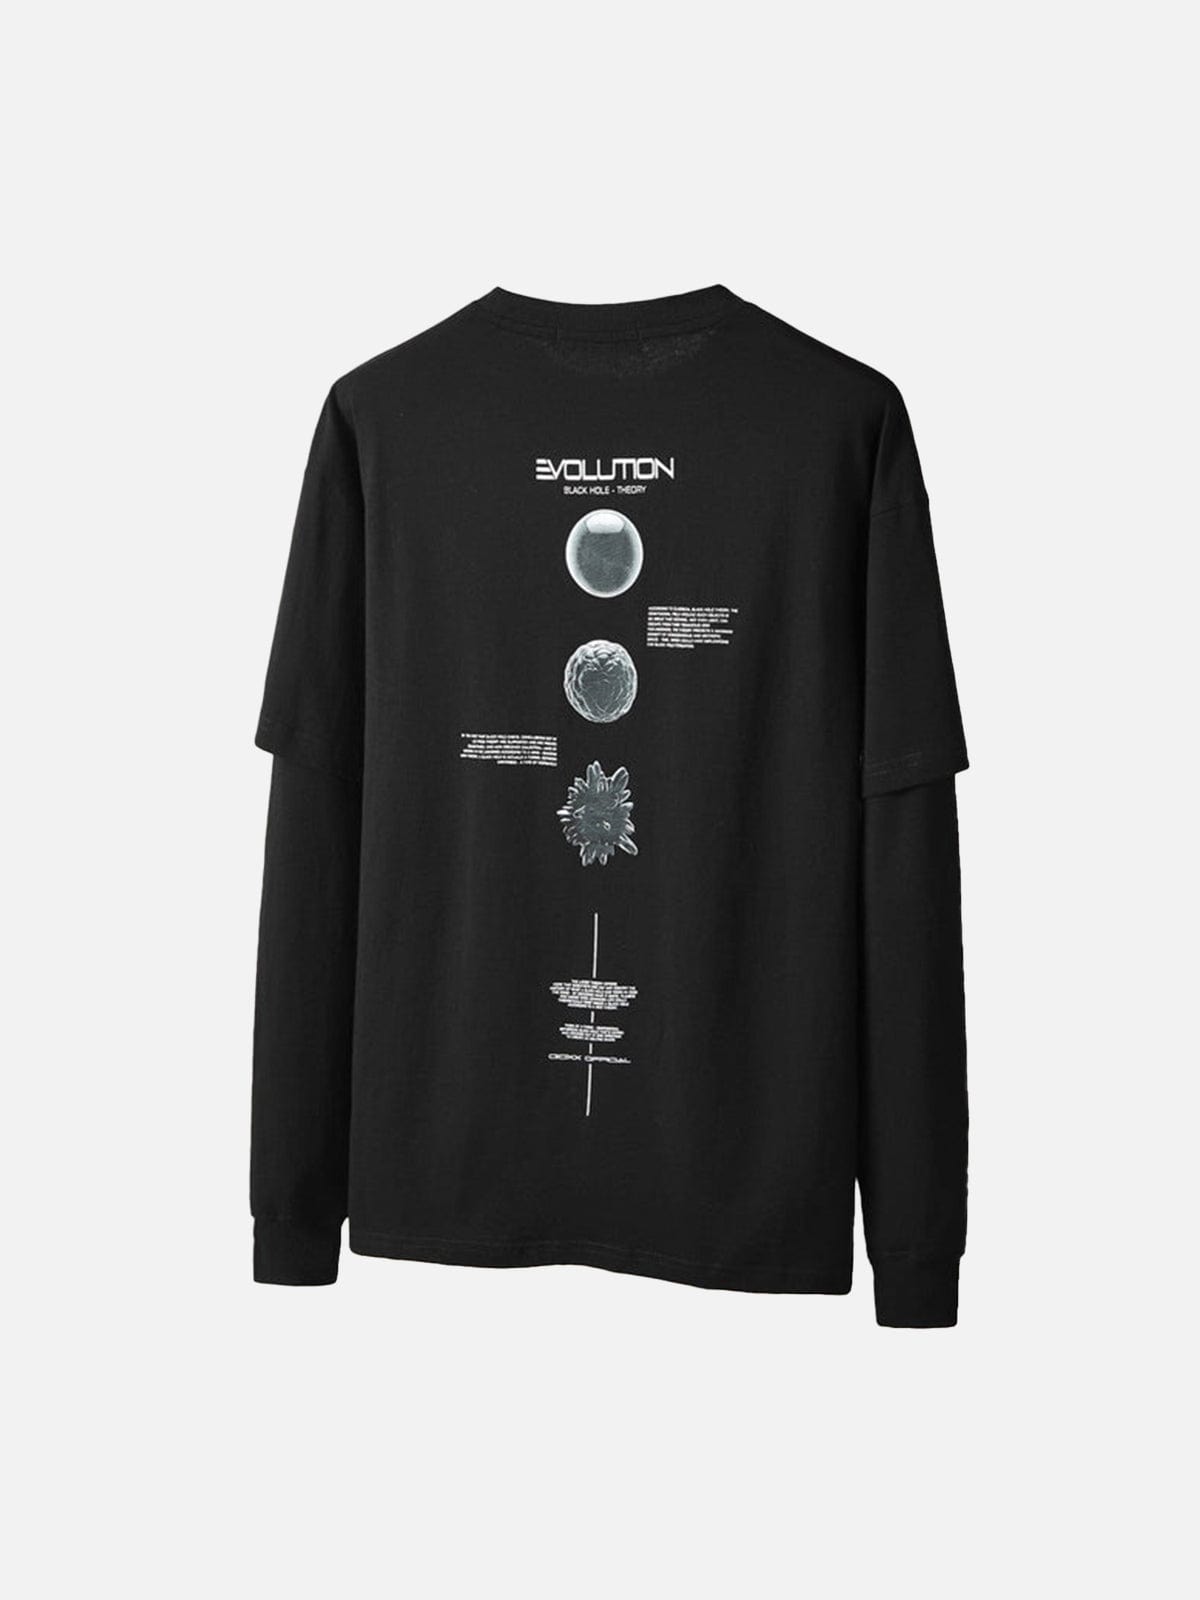 NEV Fake Two Cell Evolution Print Sweatshirt